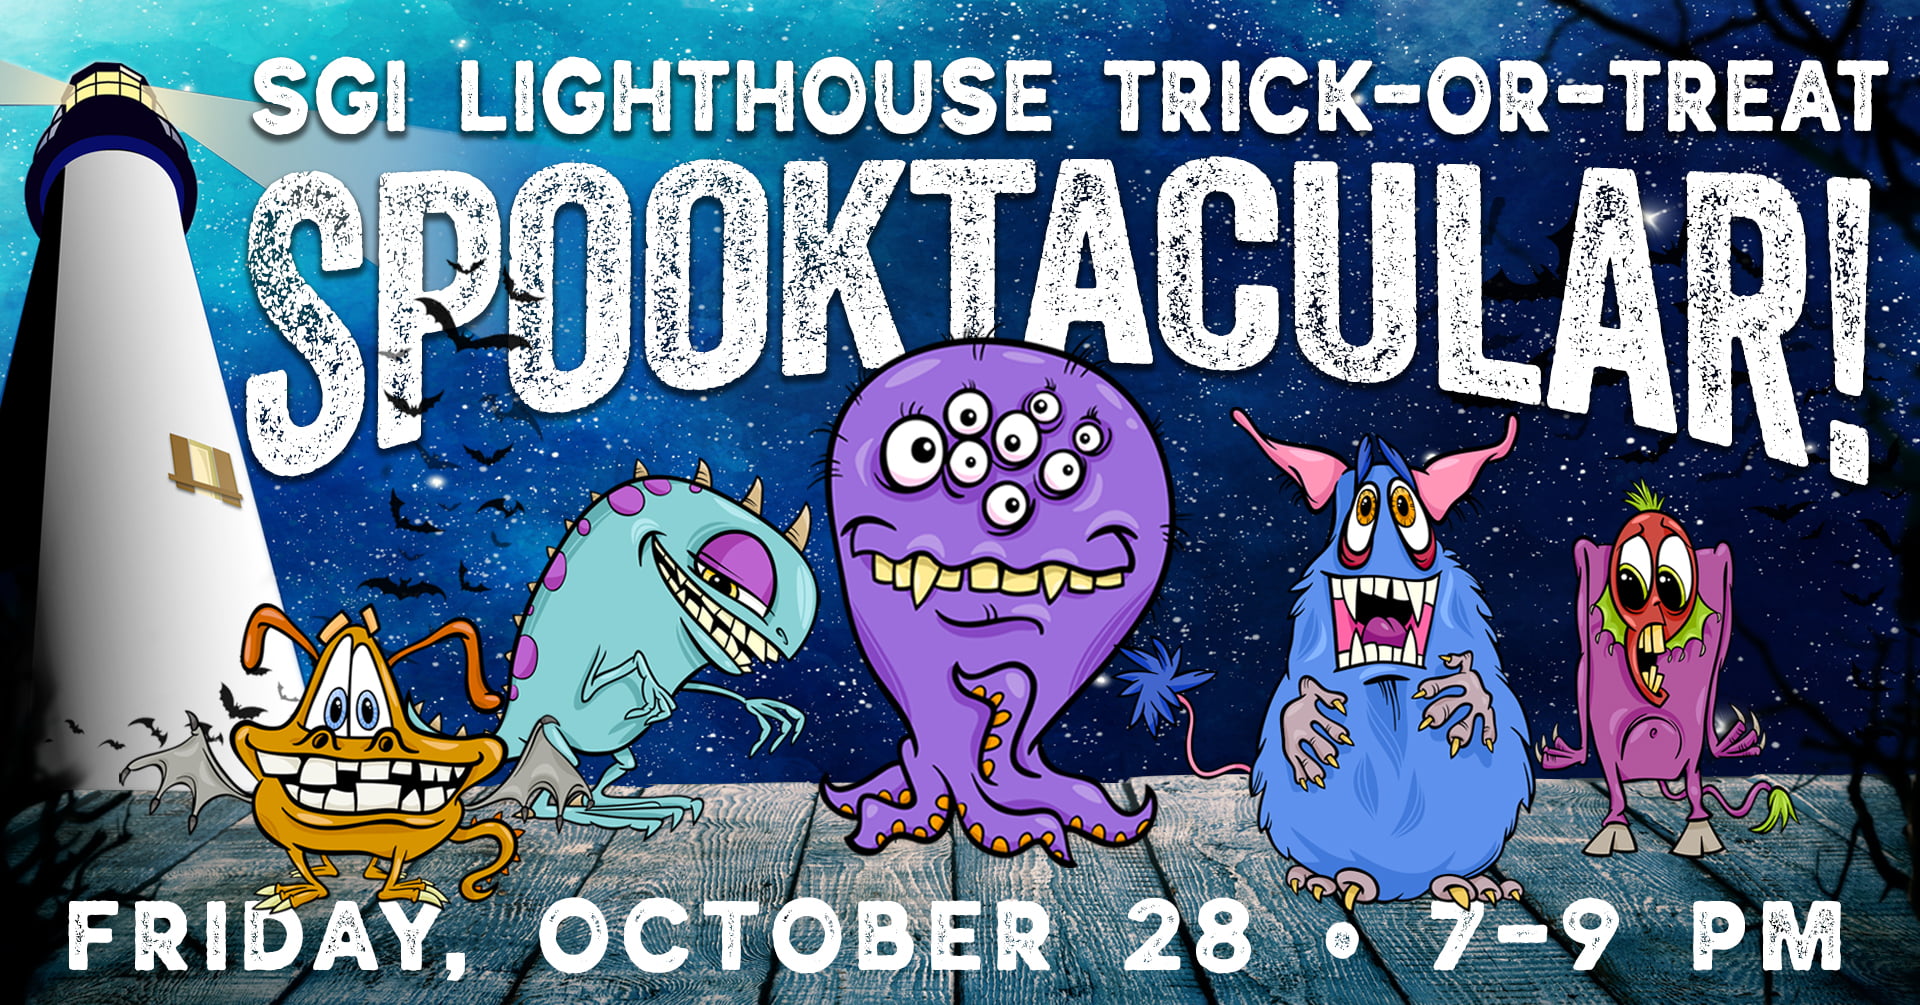 3rd Annual SGI Lighthouse Trick-or-Treat Spooktacular